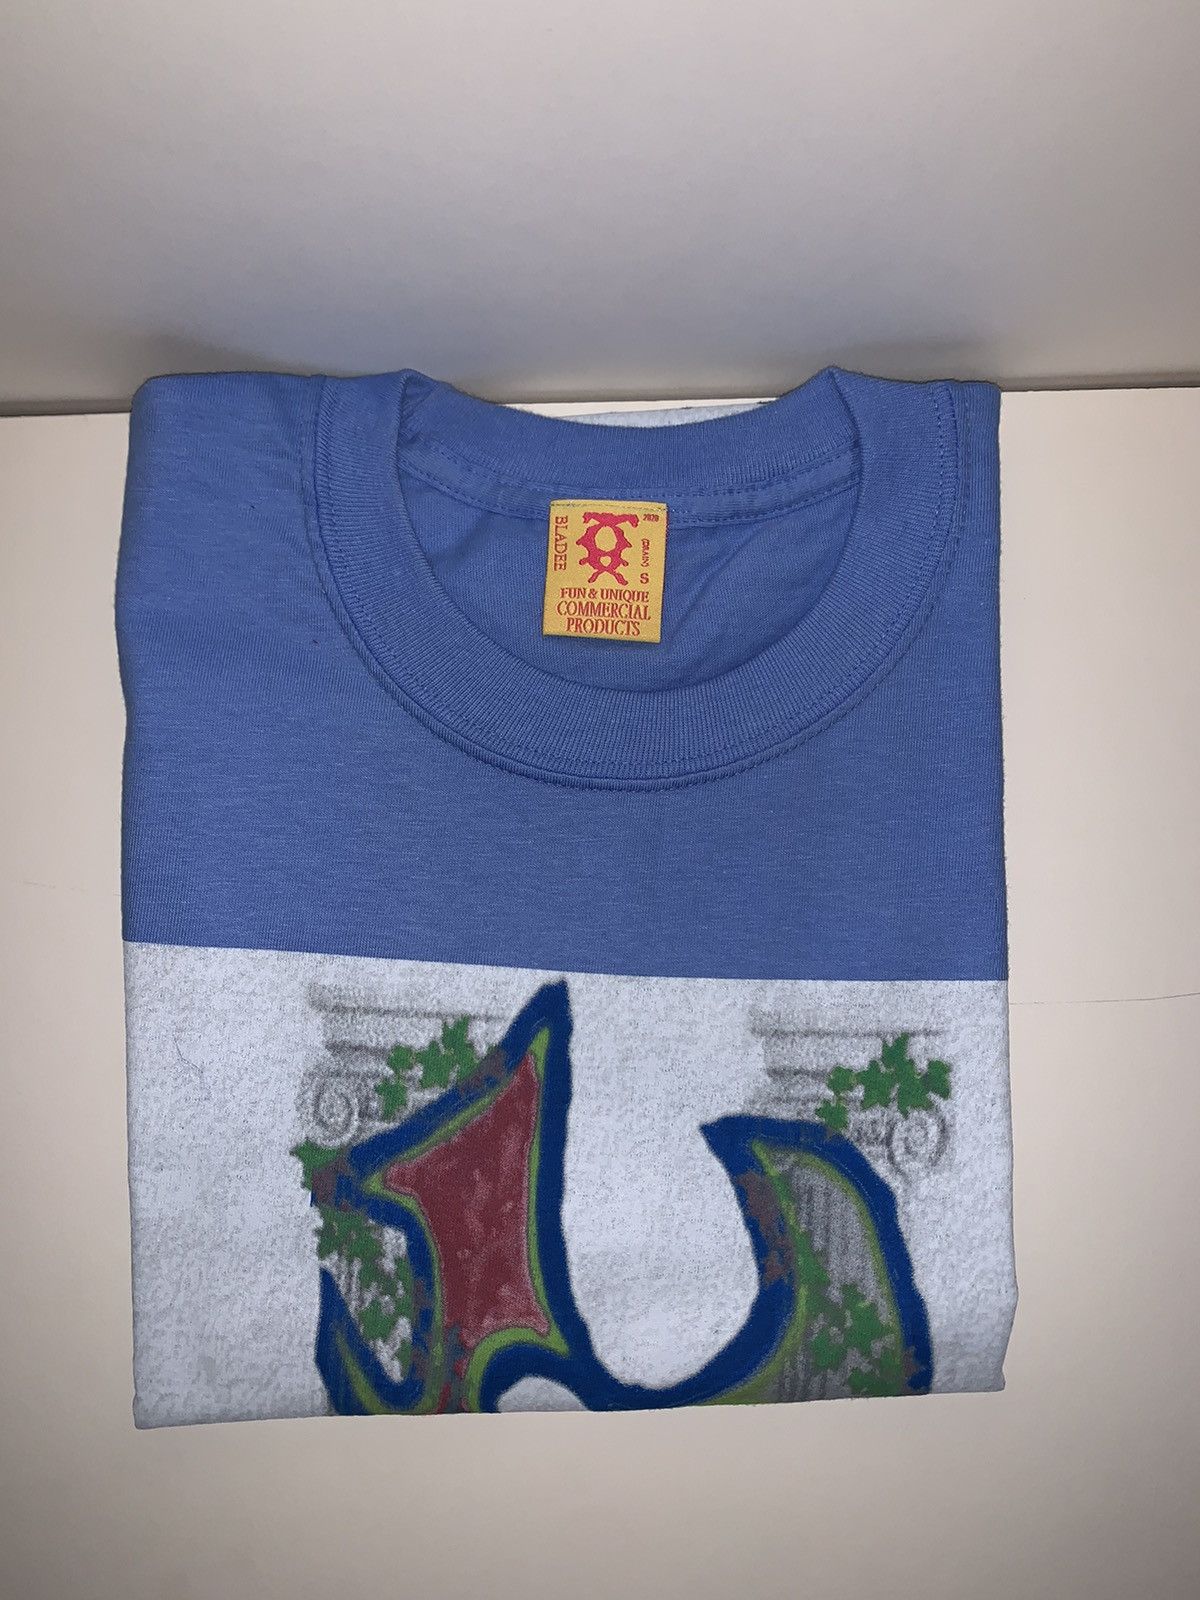 Sad Boys Sbe Merch Bladee Excelsior Temple Sprite T-shirt (Light Blue) Size US S / EU 44-46 / 1 - 1 Preview